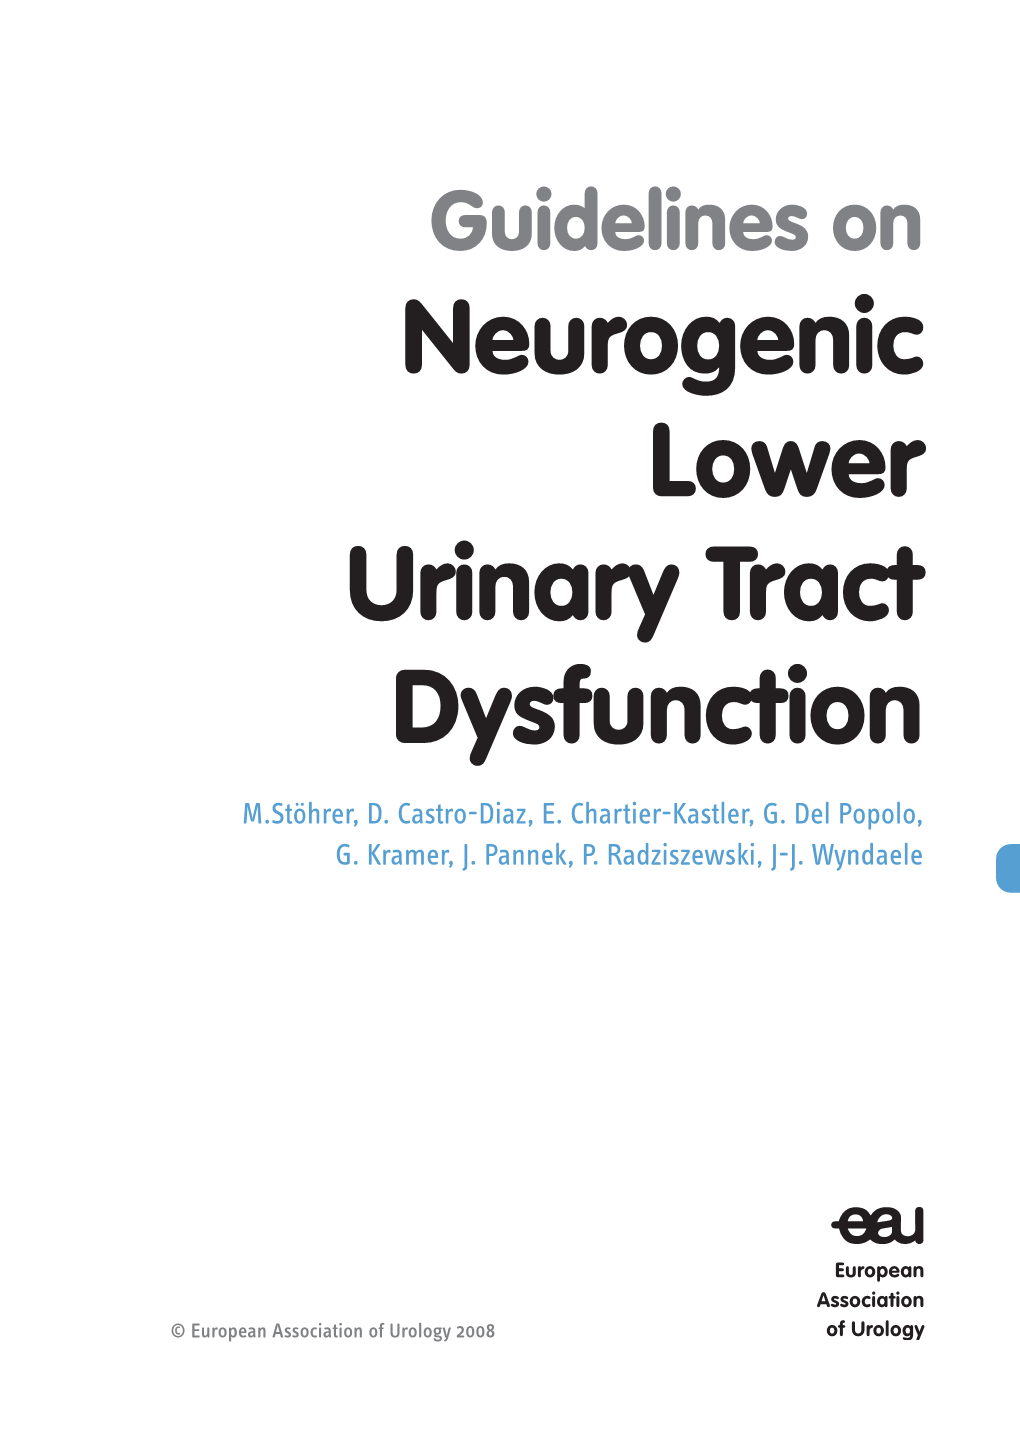 Neurogenic Lower Urinary Tract Dysfunction